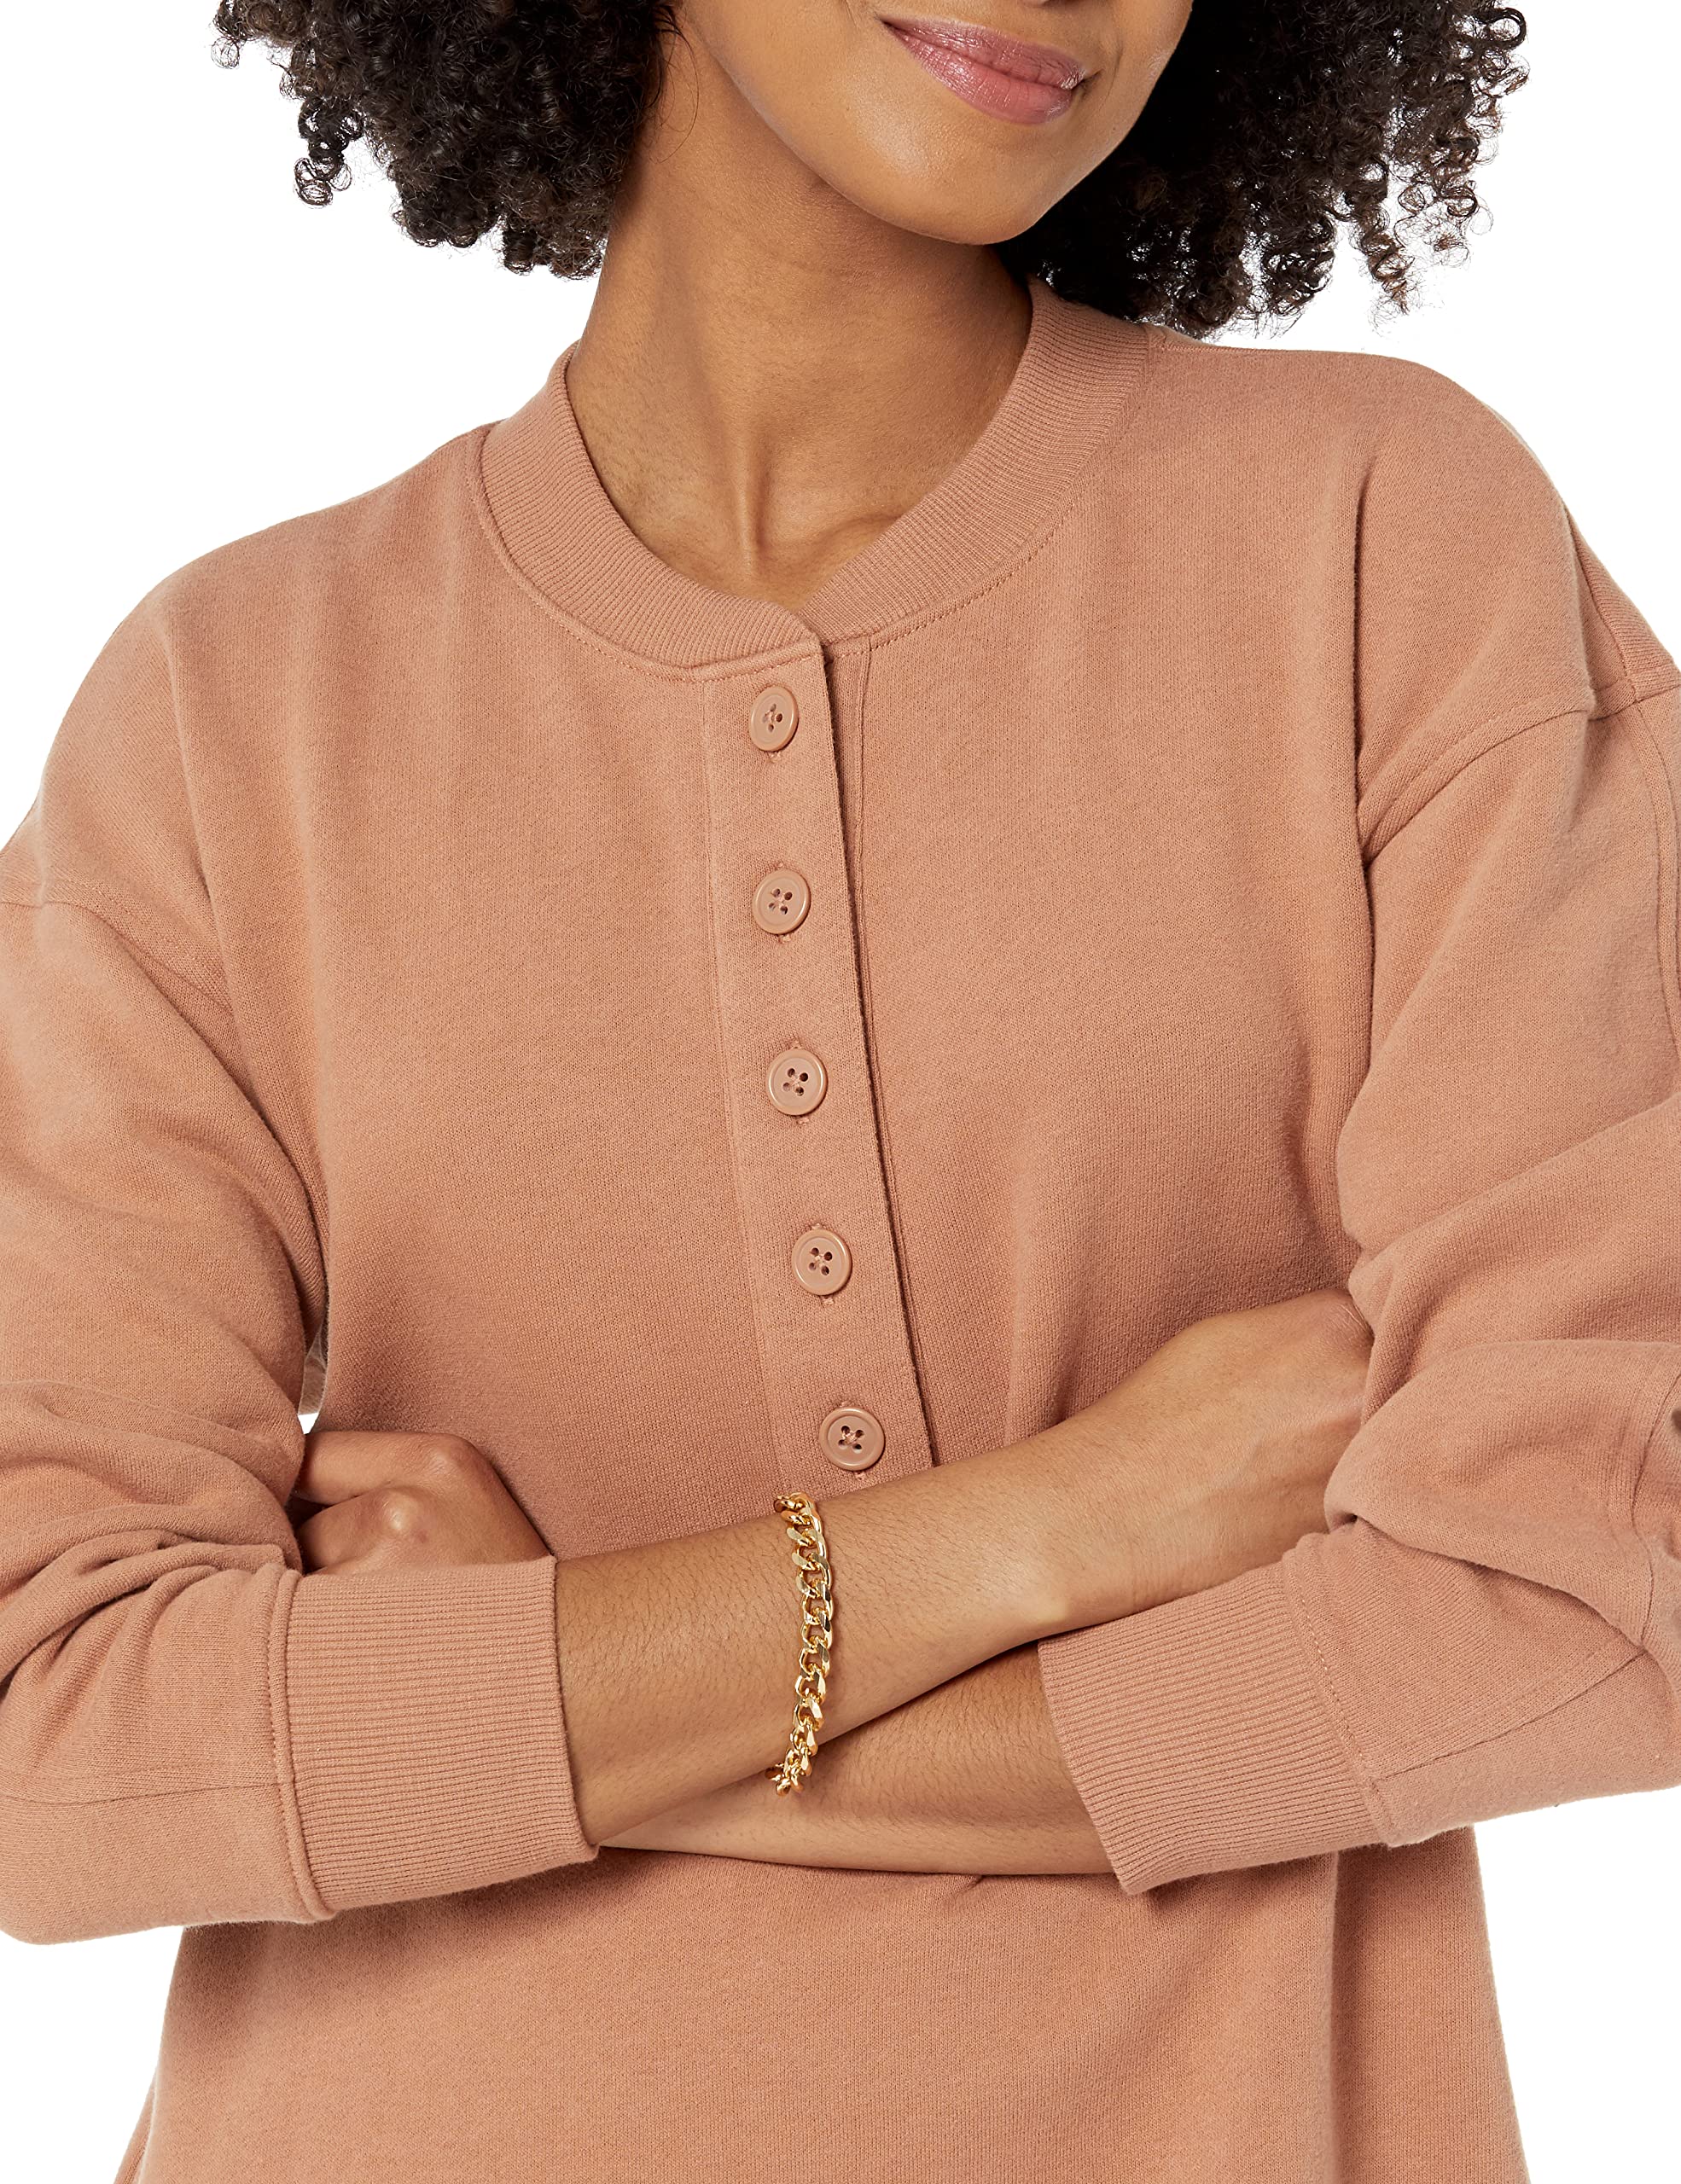 Amazon Essentials Women's Knit Henley Sweatshirt Dress (Available in Plus Size)